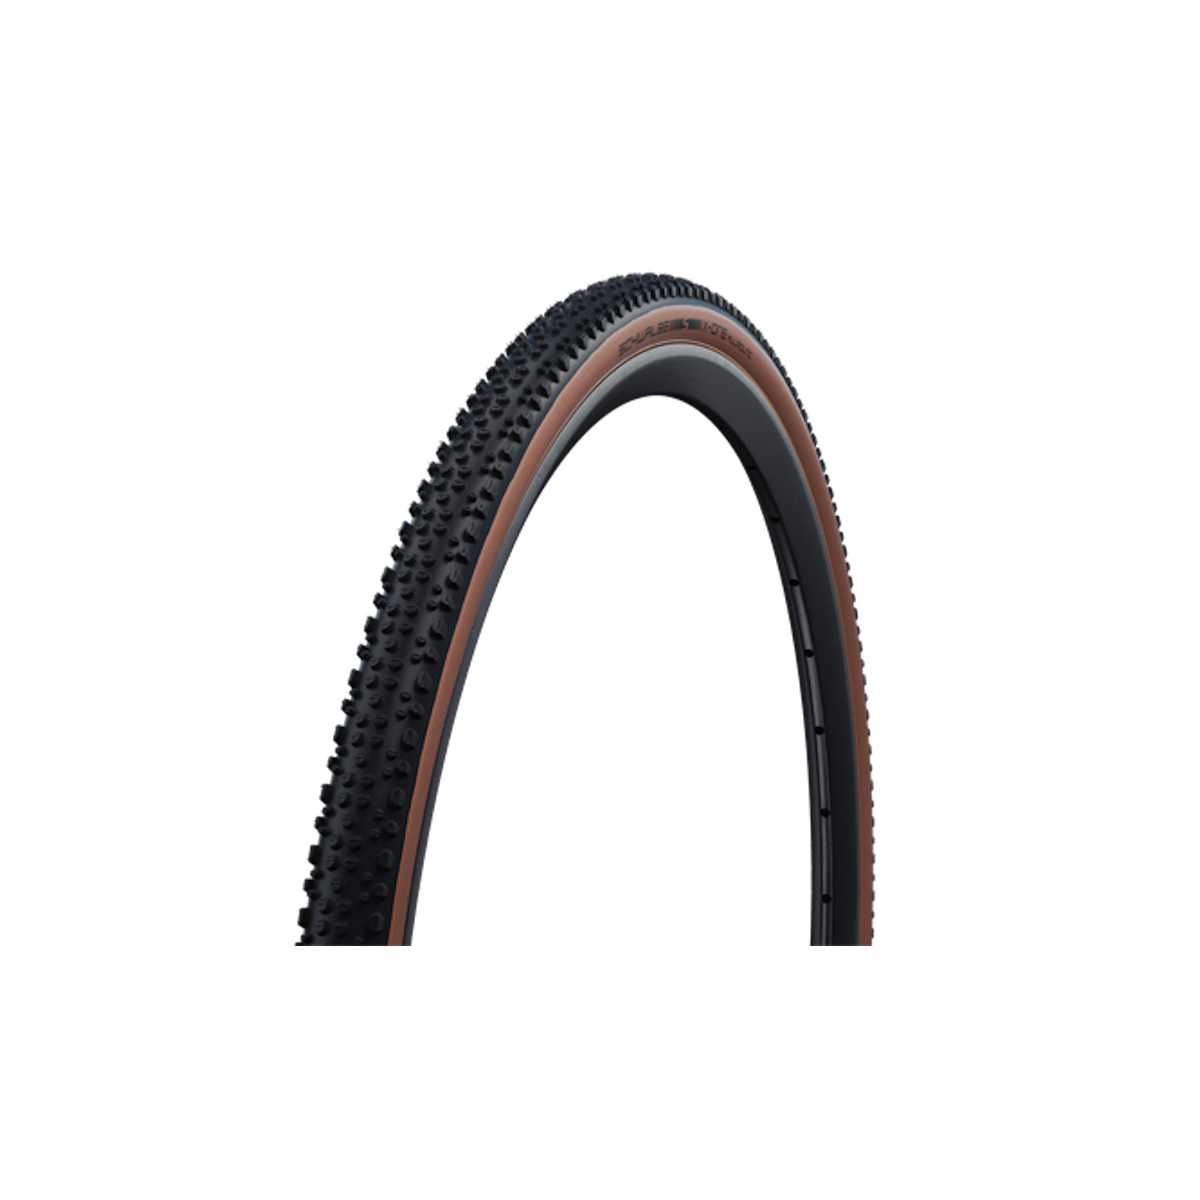 SCHWALBE X-ONE ALLROUND 700 x 33C tubeless tyre